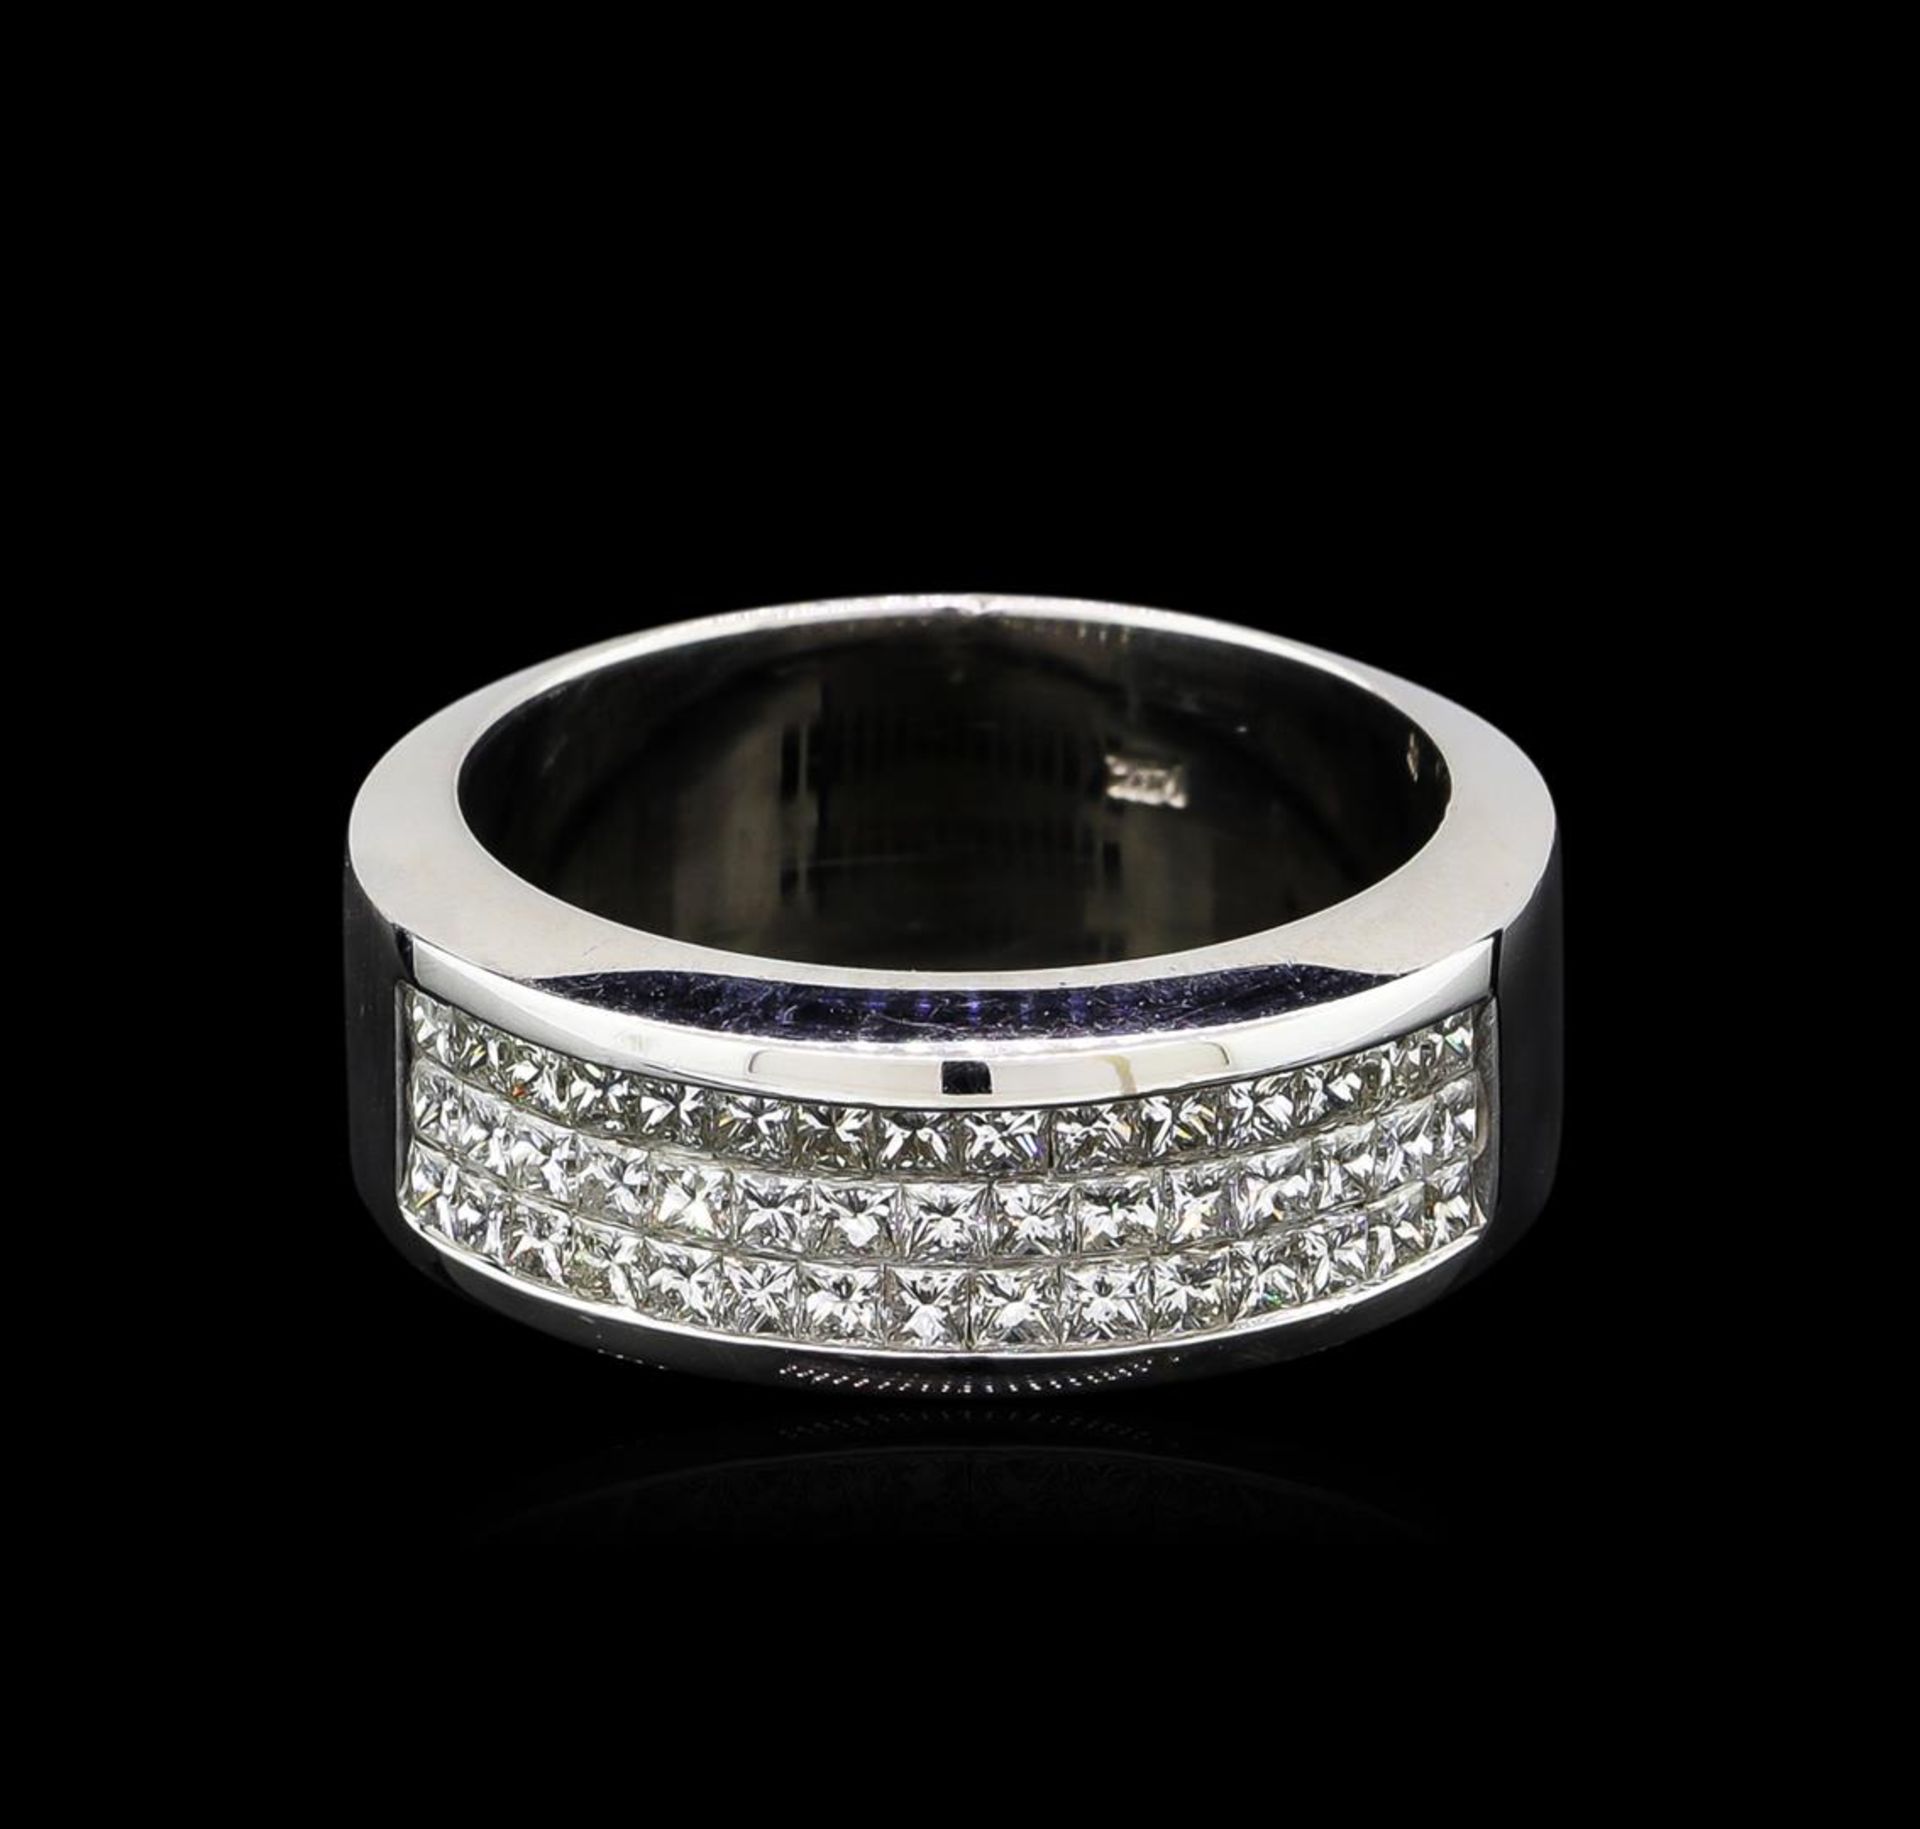 1.60 ctw Diamond Ring - 14KT White Gold - Image 2 of 5